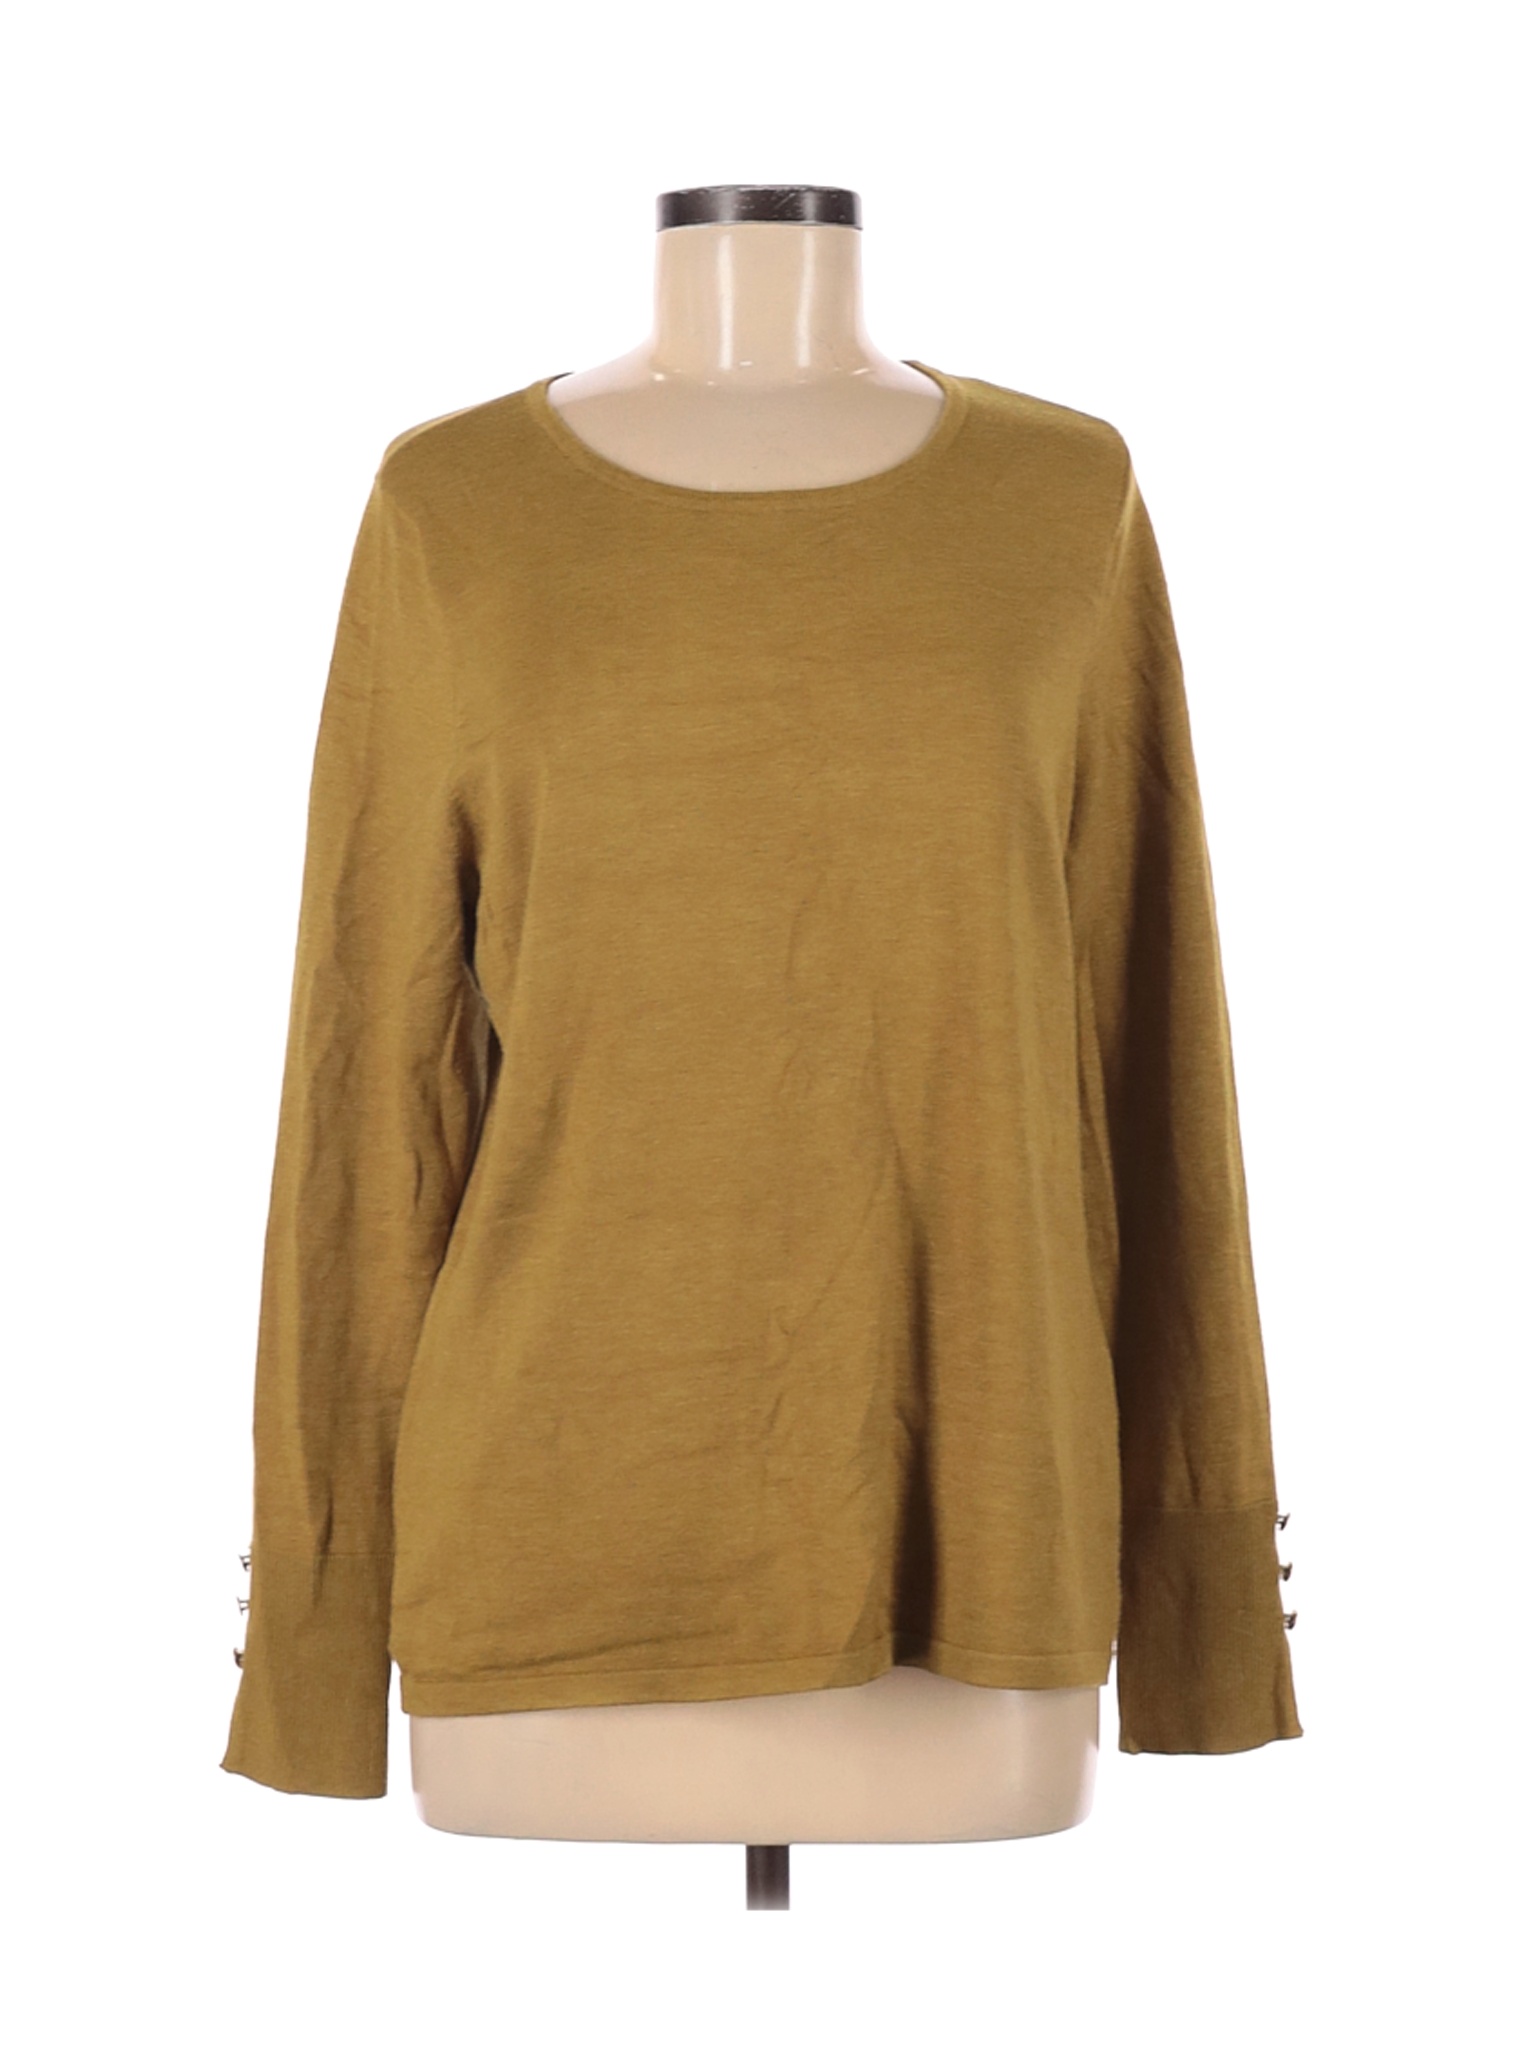 Chico's Women Green Pullover Sweater M | eBay